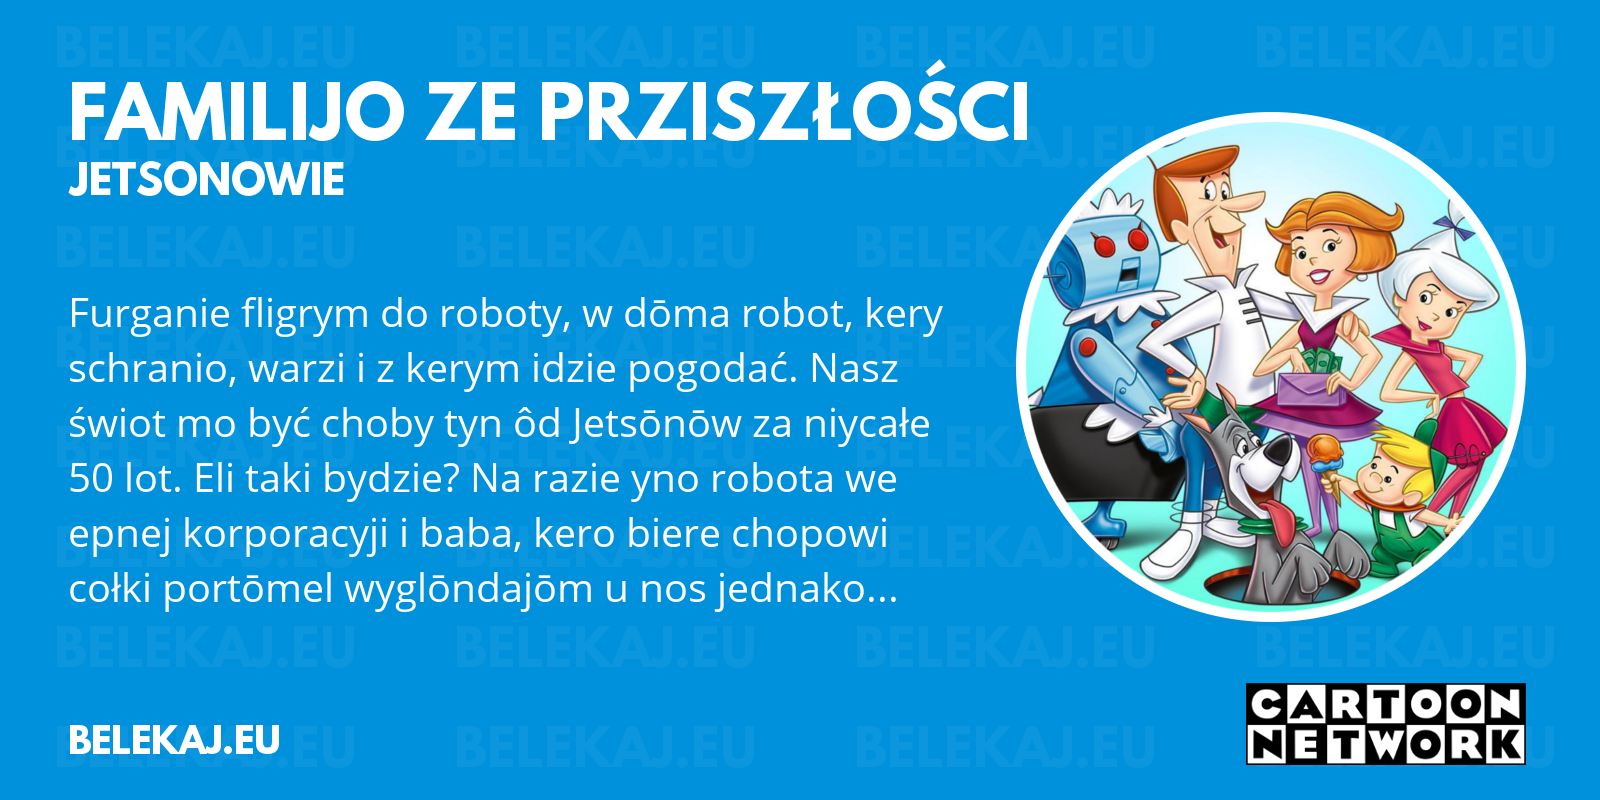 Jetsonowie, Cartoon Network po śląsku - blog bele kaj